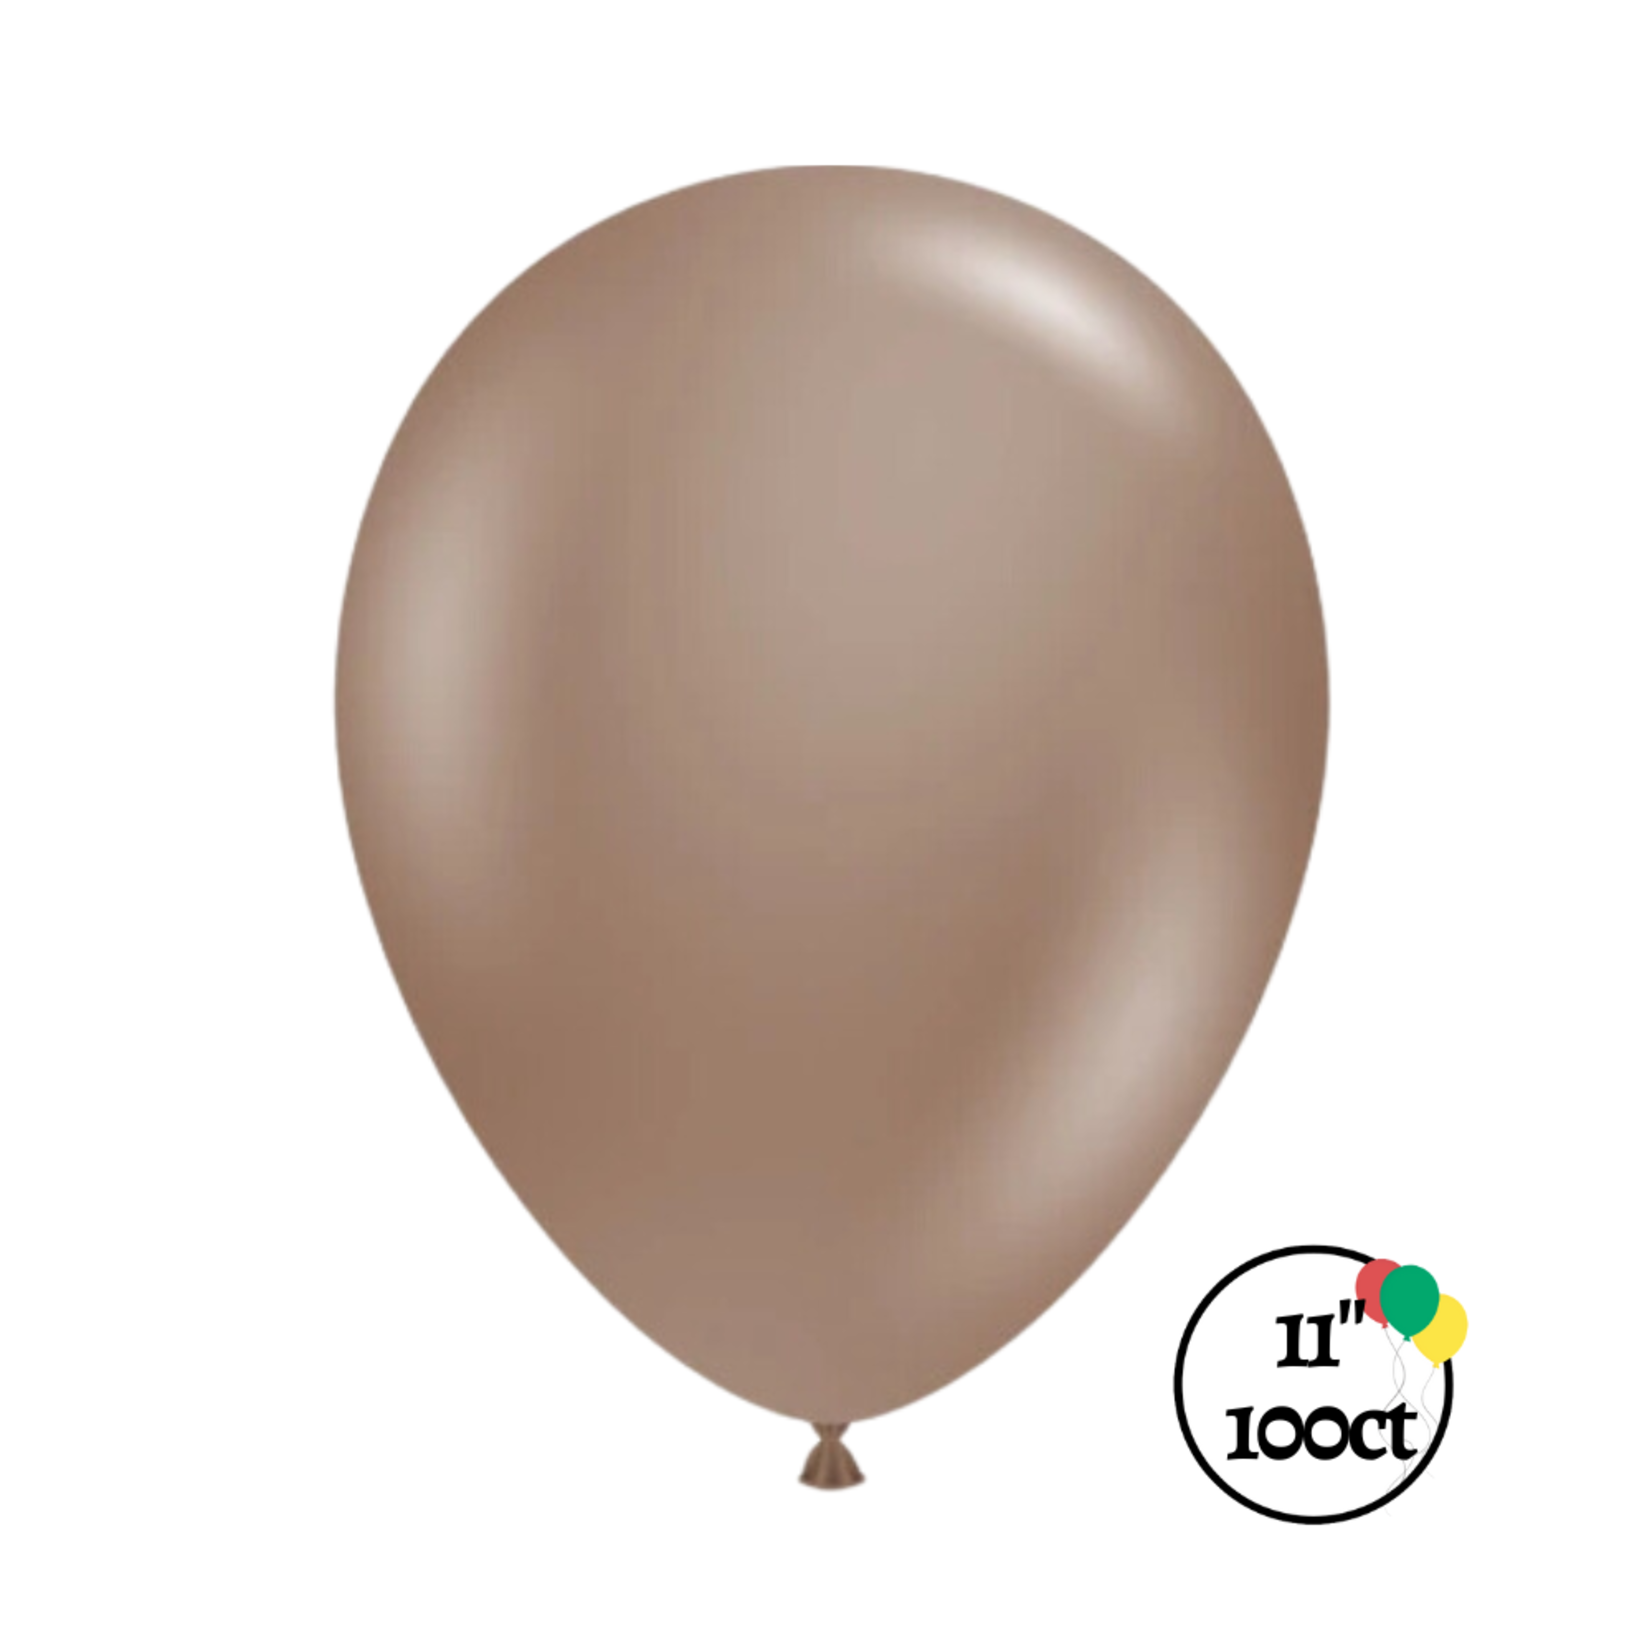 11" Tuftex Cocoa 100ct Balloon